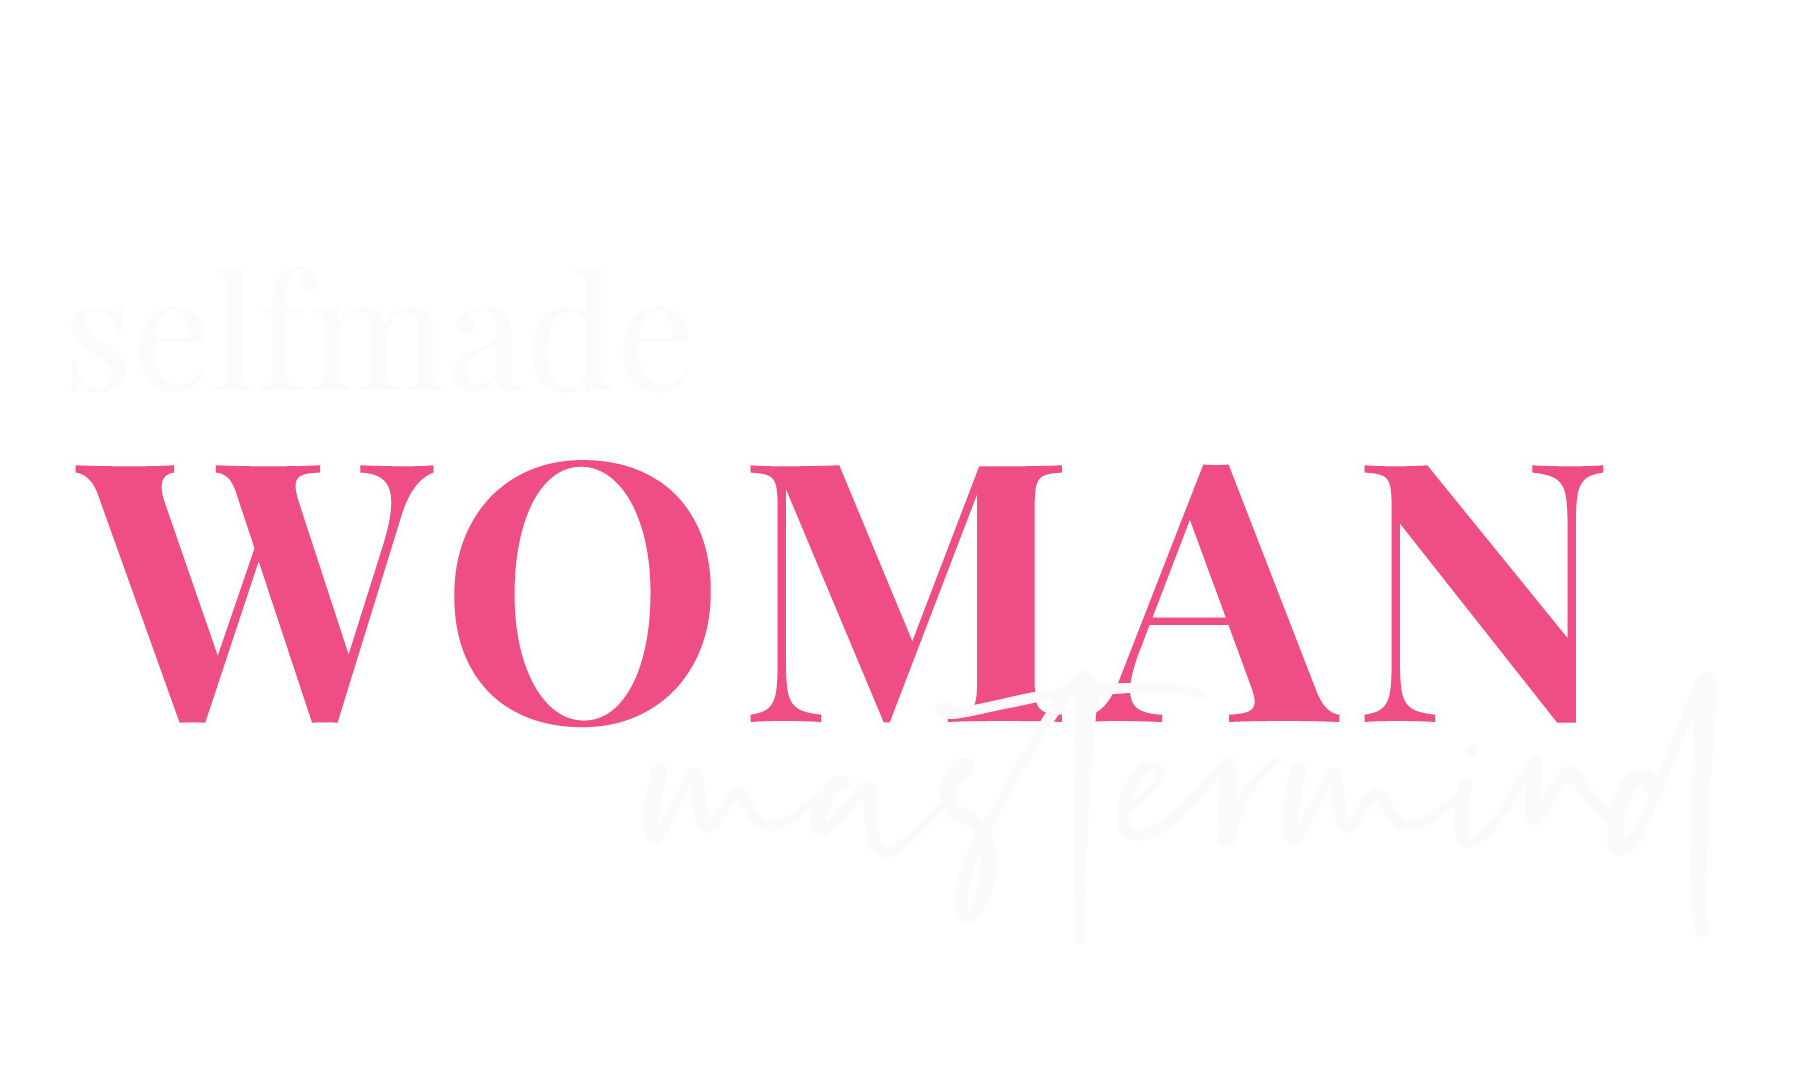 Logo_selfmade_Woman_Mastermind_white